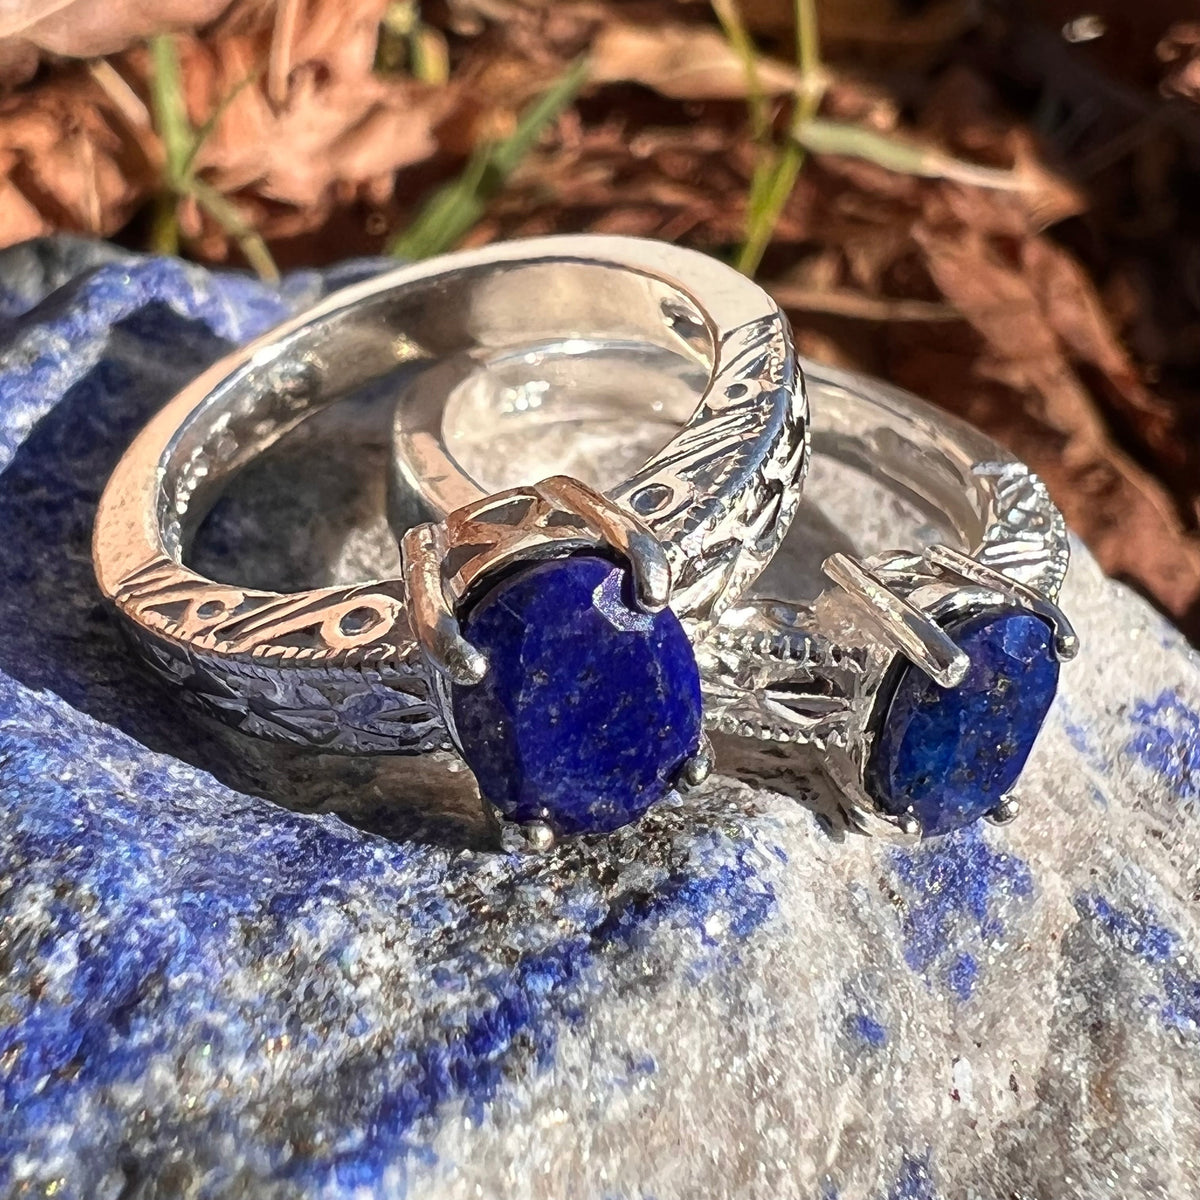 Lapis Lazuli Ring Sterling Silver Faceted Gem #3436-Moldavite Life